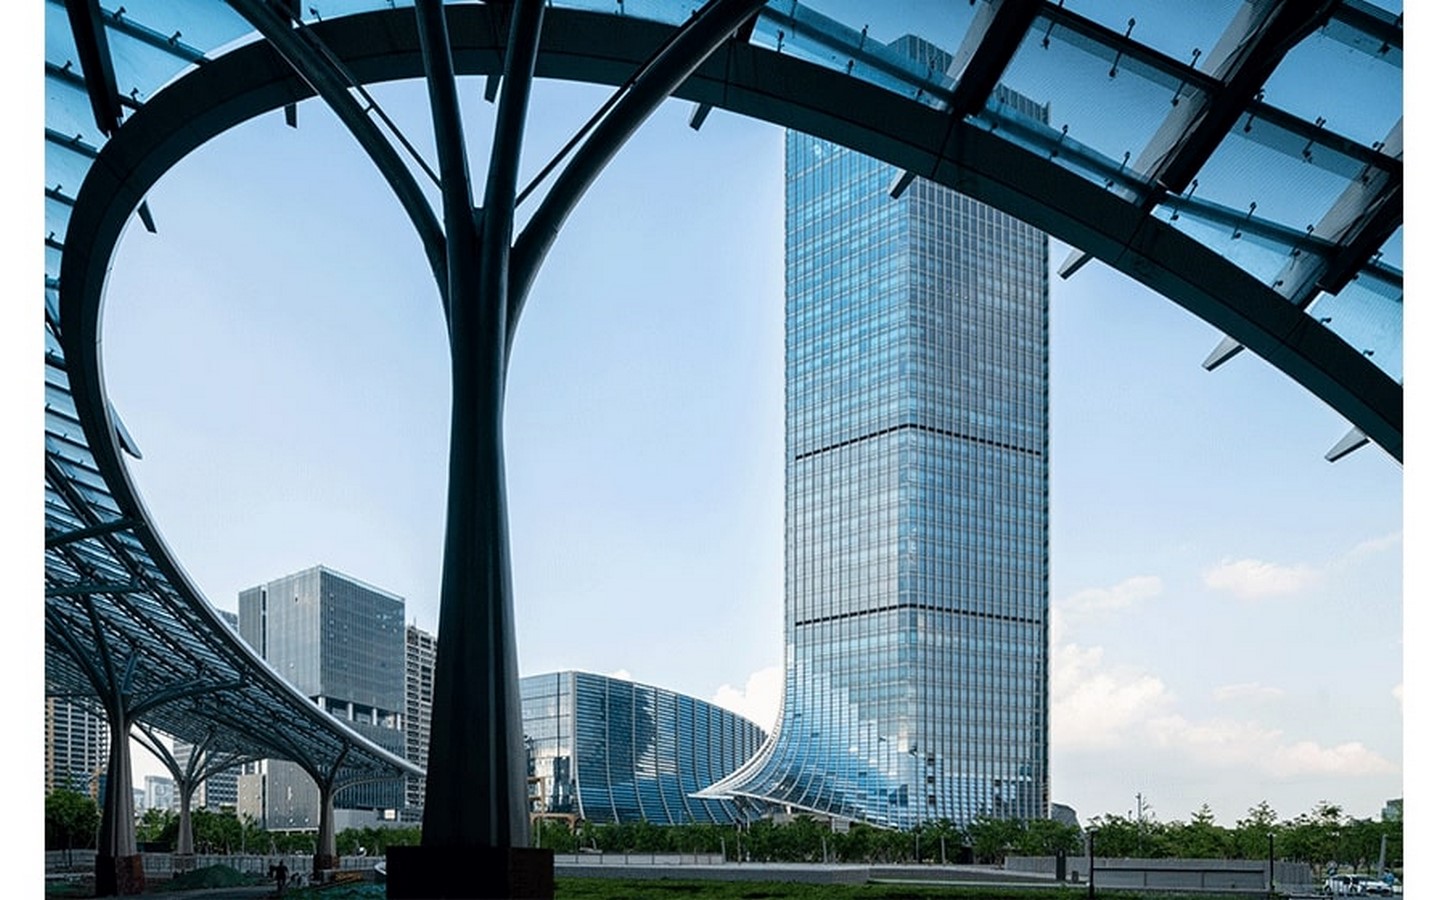 Shanghai West Bund International AI Tower and Plaza by Nikken Sekkei - Sheet3